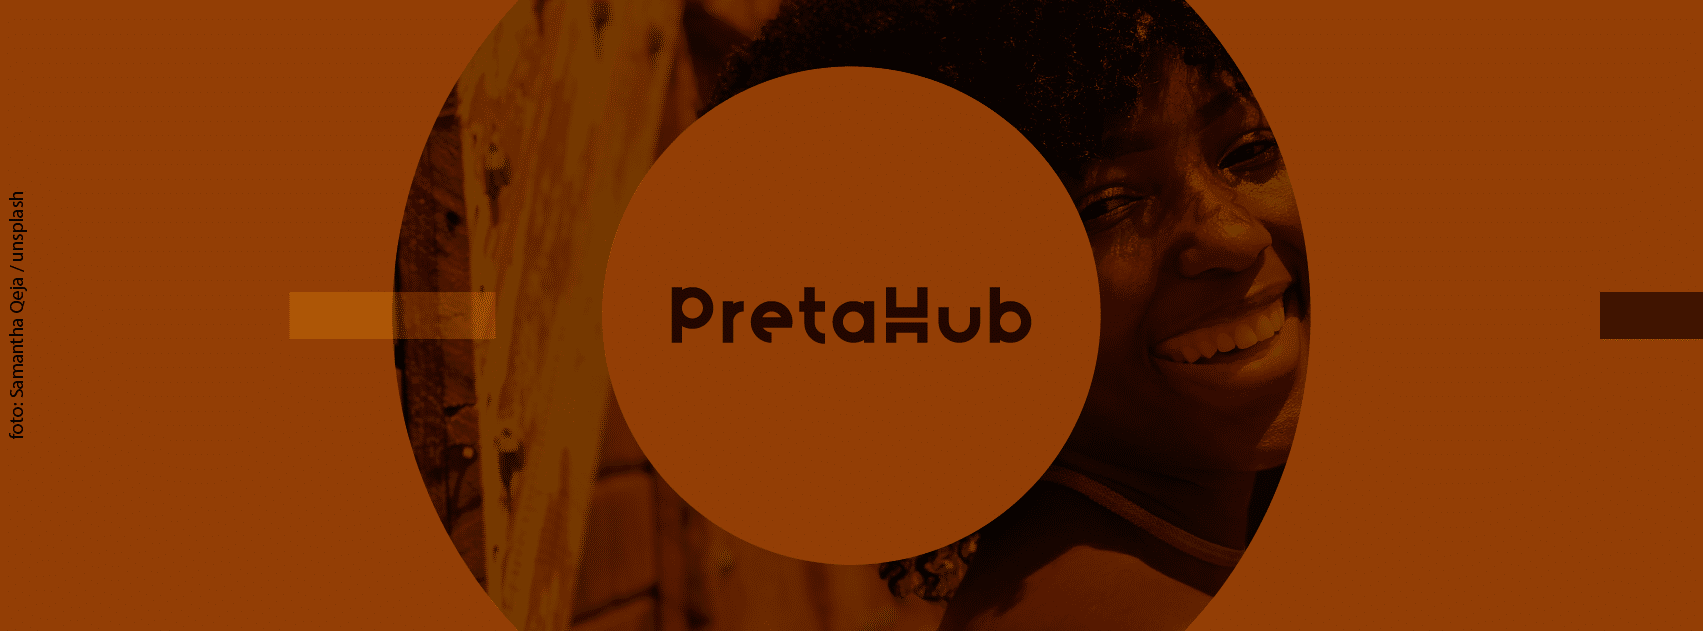 Pretahub: apoio e fomento ao empreendedorismo negro